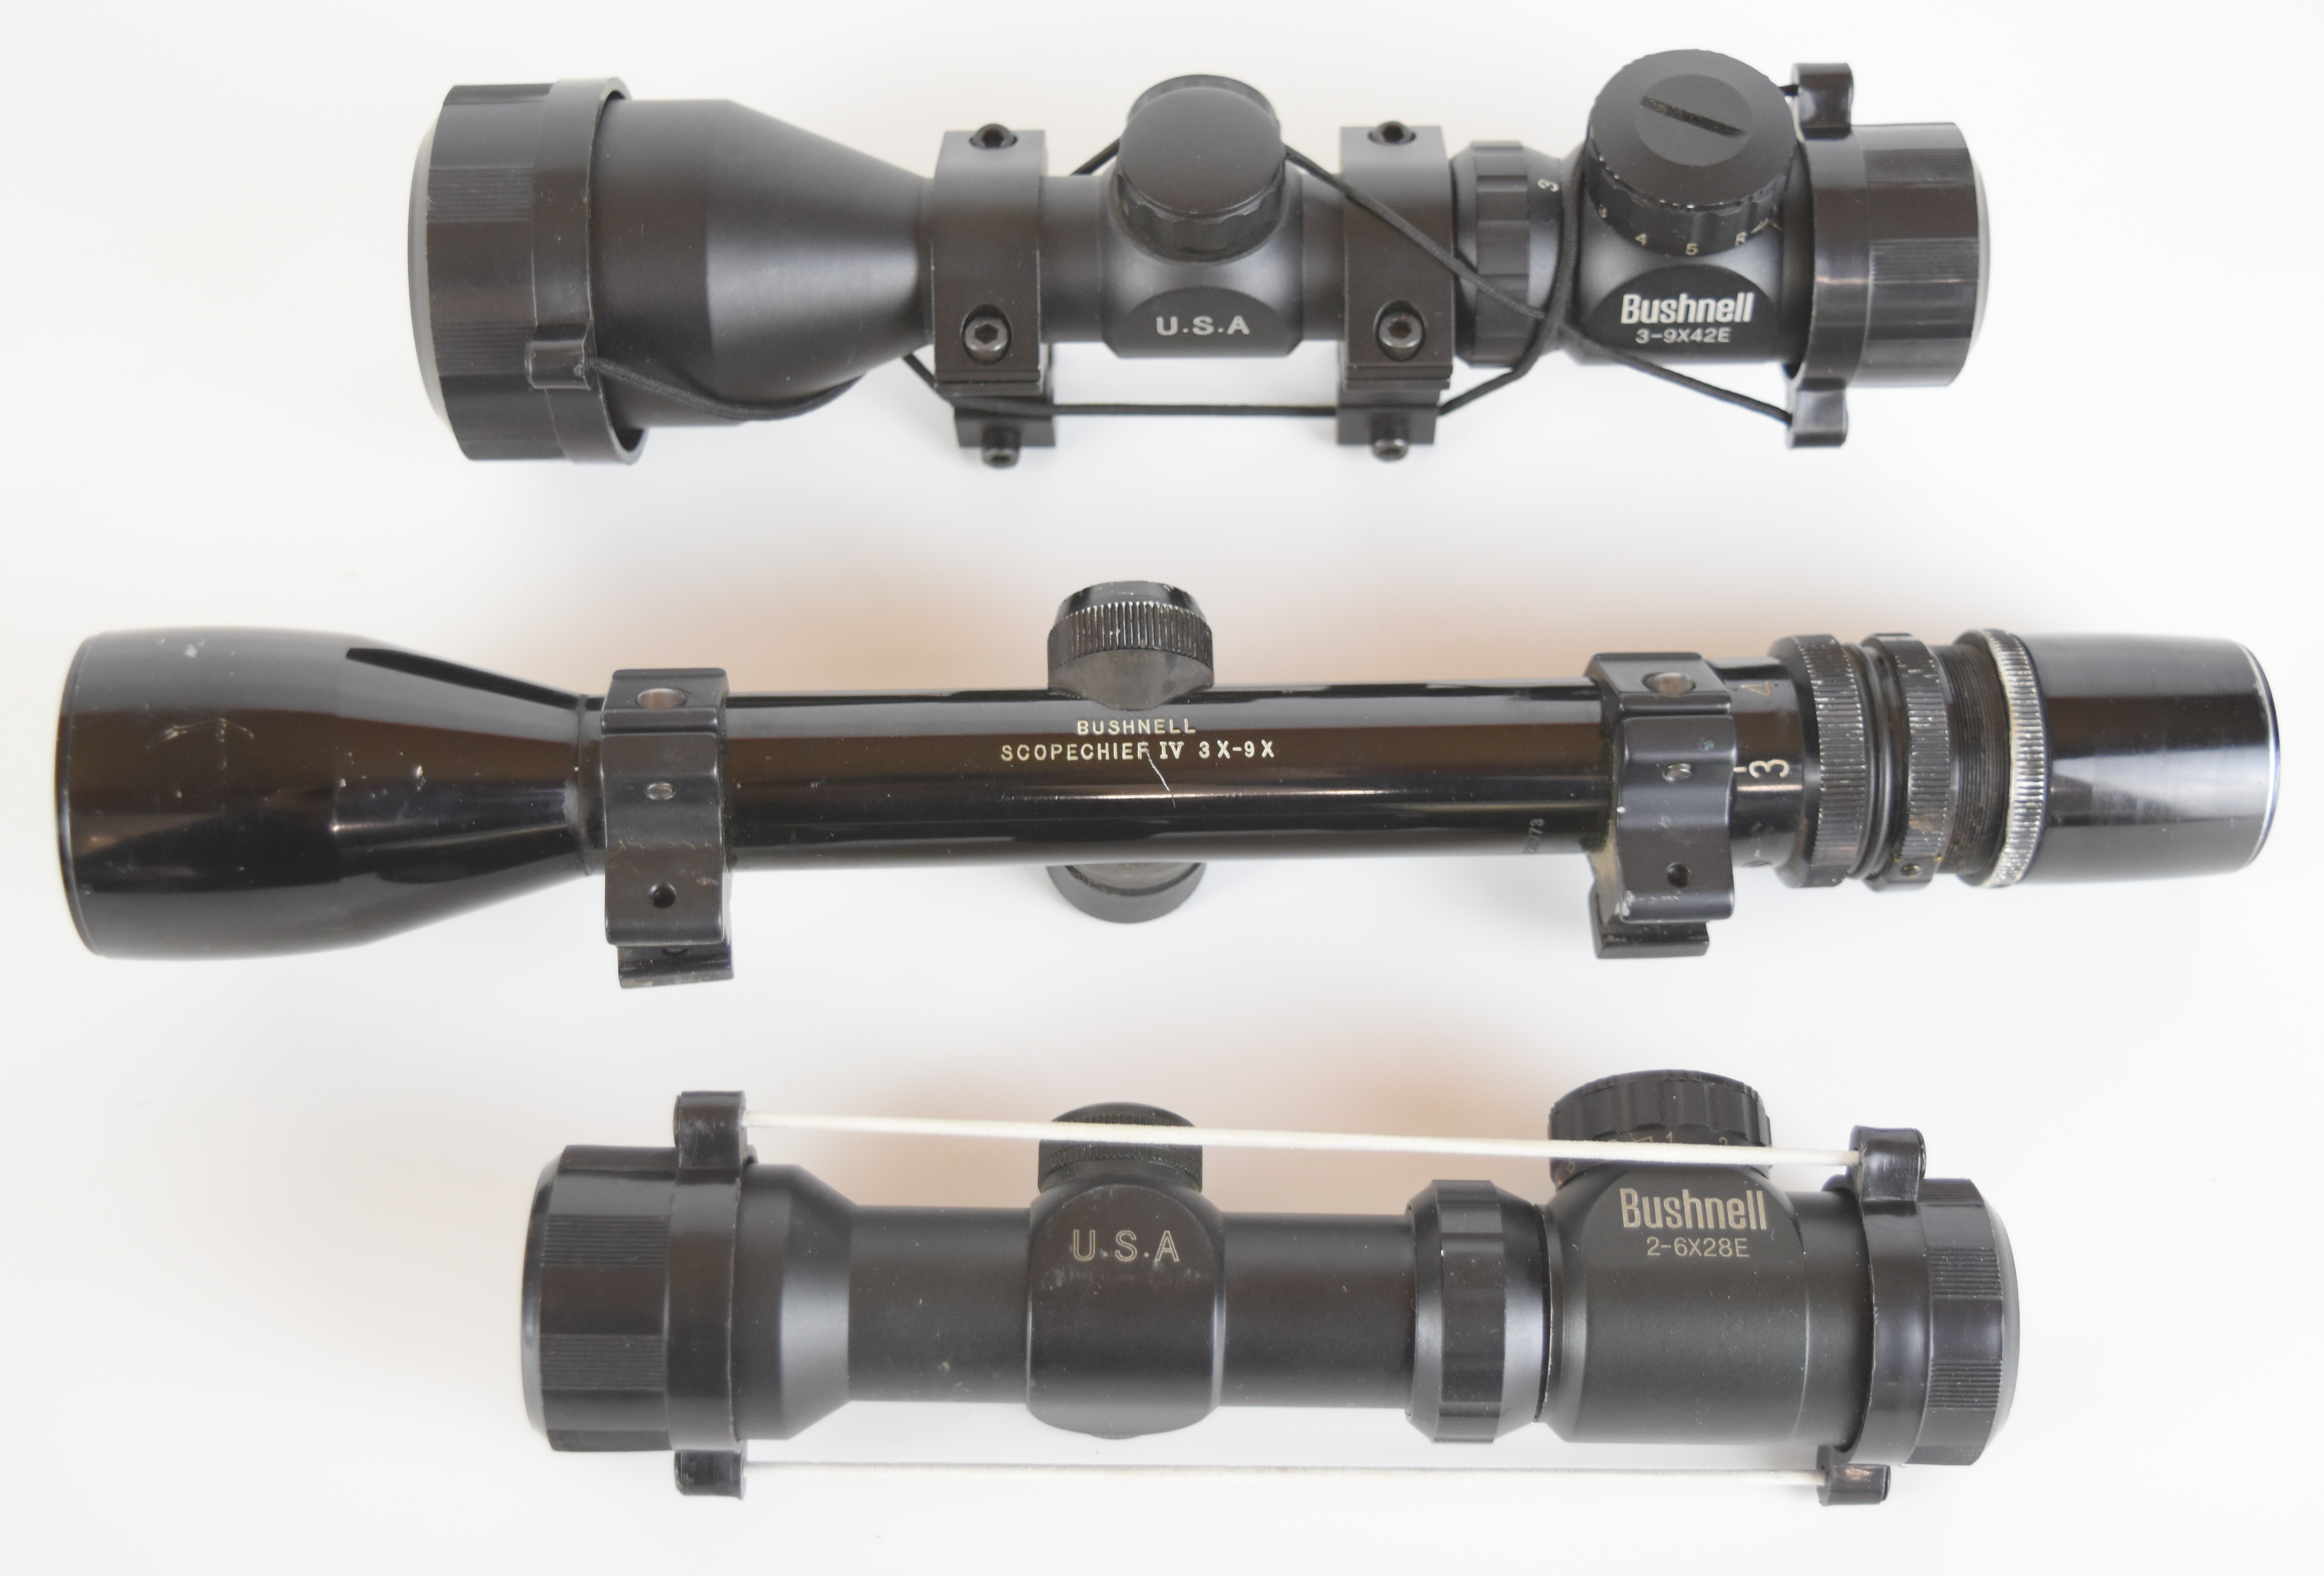 Three Bushnell rifle scopes Scopechief IV 3x-9x, 3-9x42E and 2-6x28E.